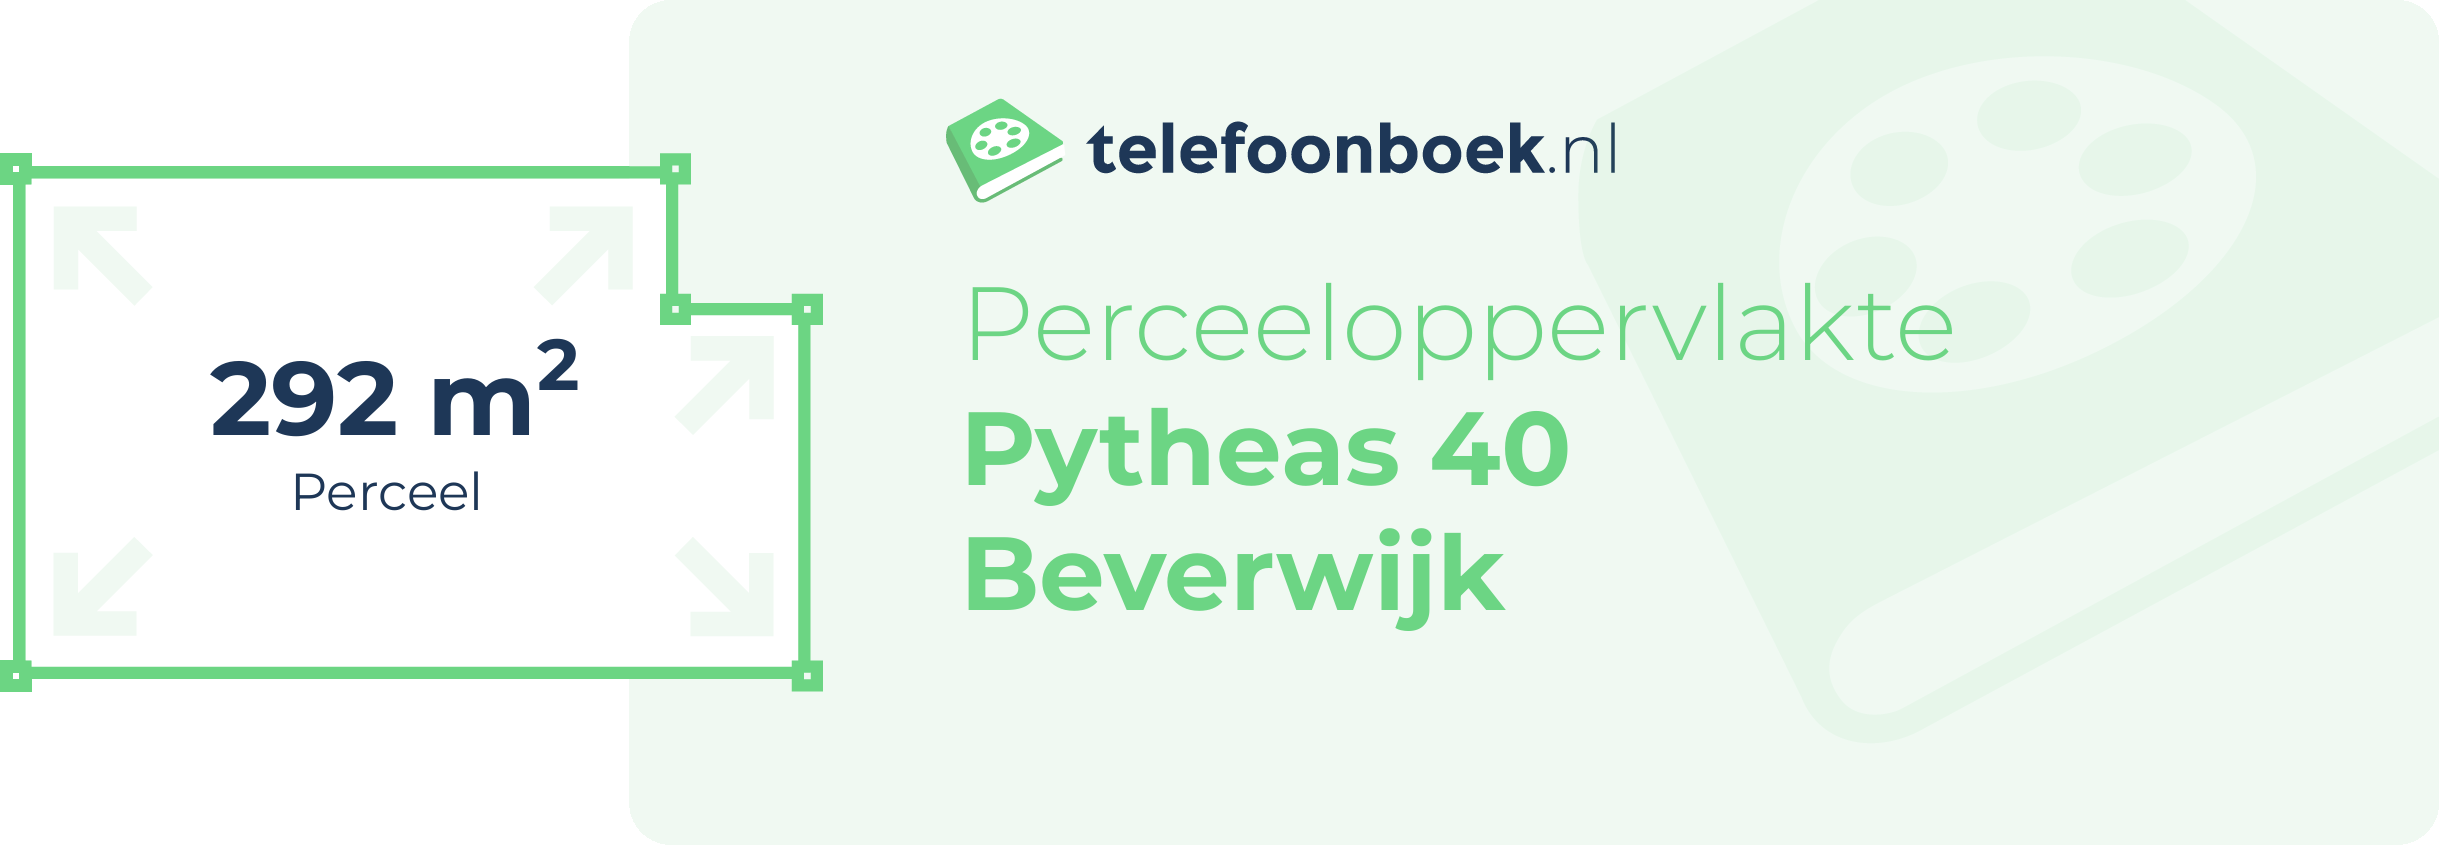 Perceeloppervlakte Pytheas 40 Beverwijk